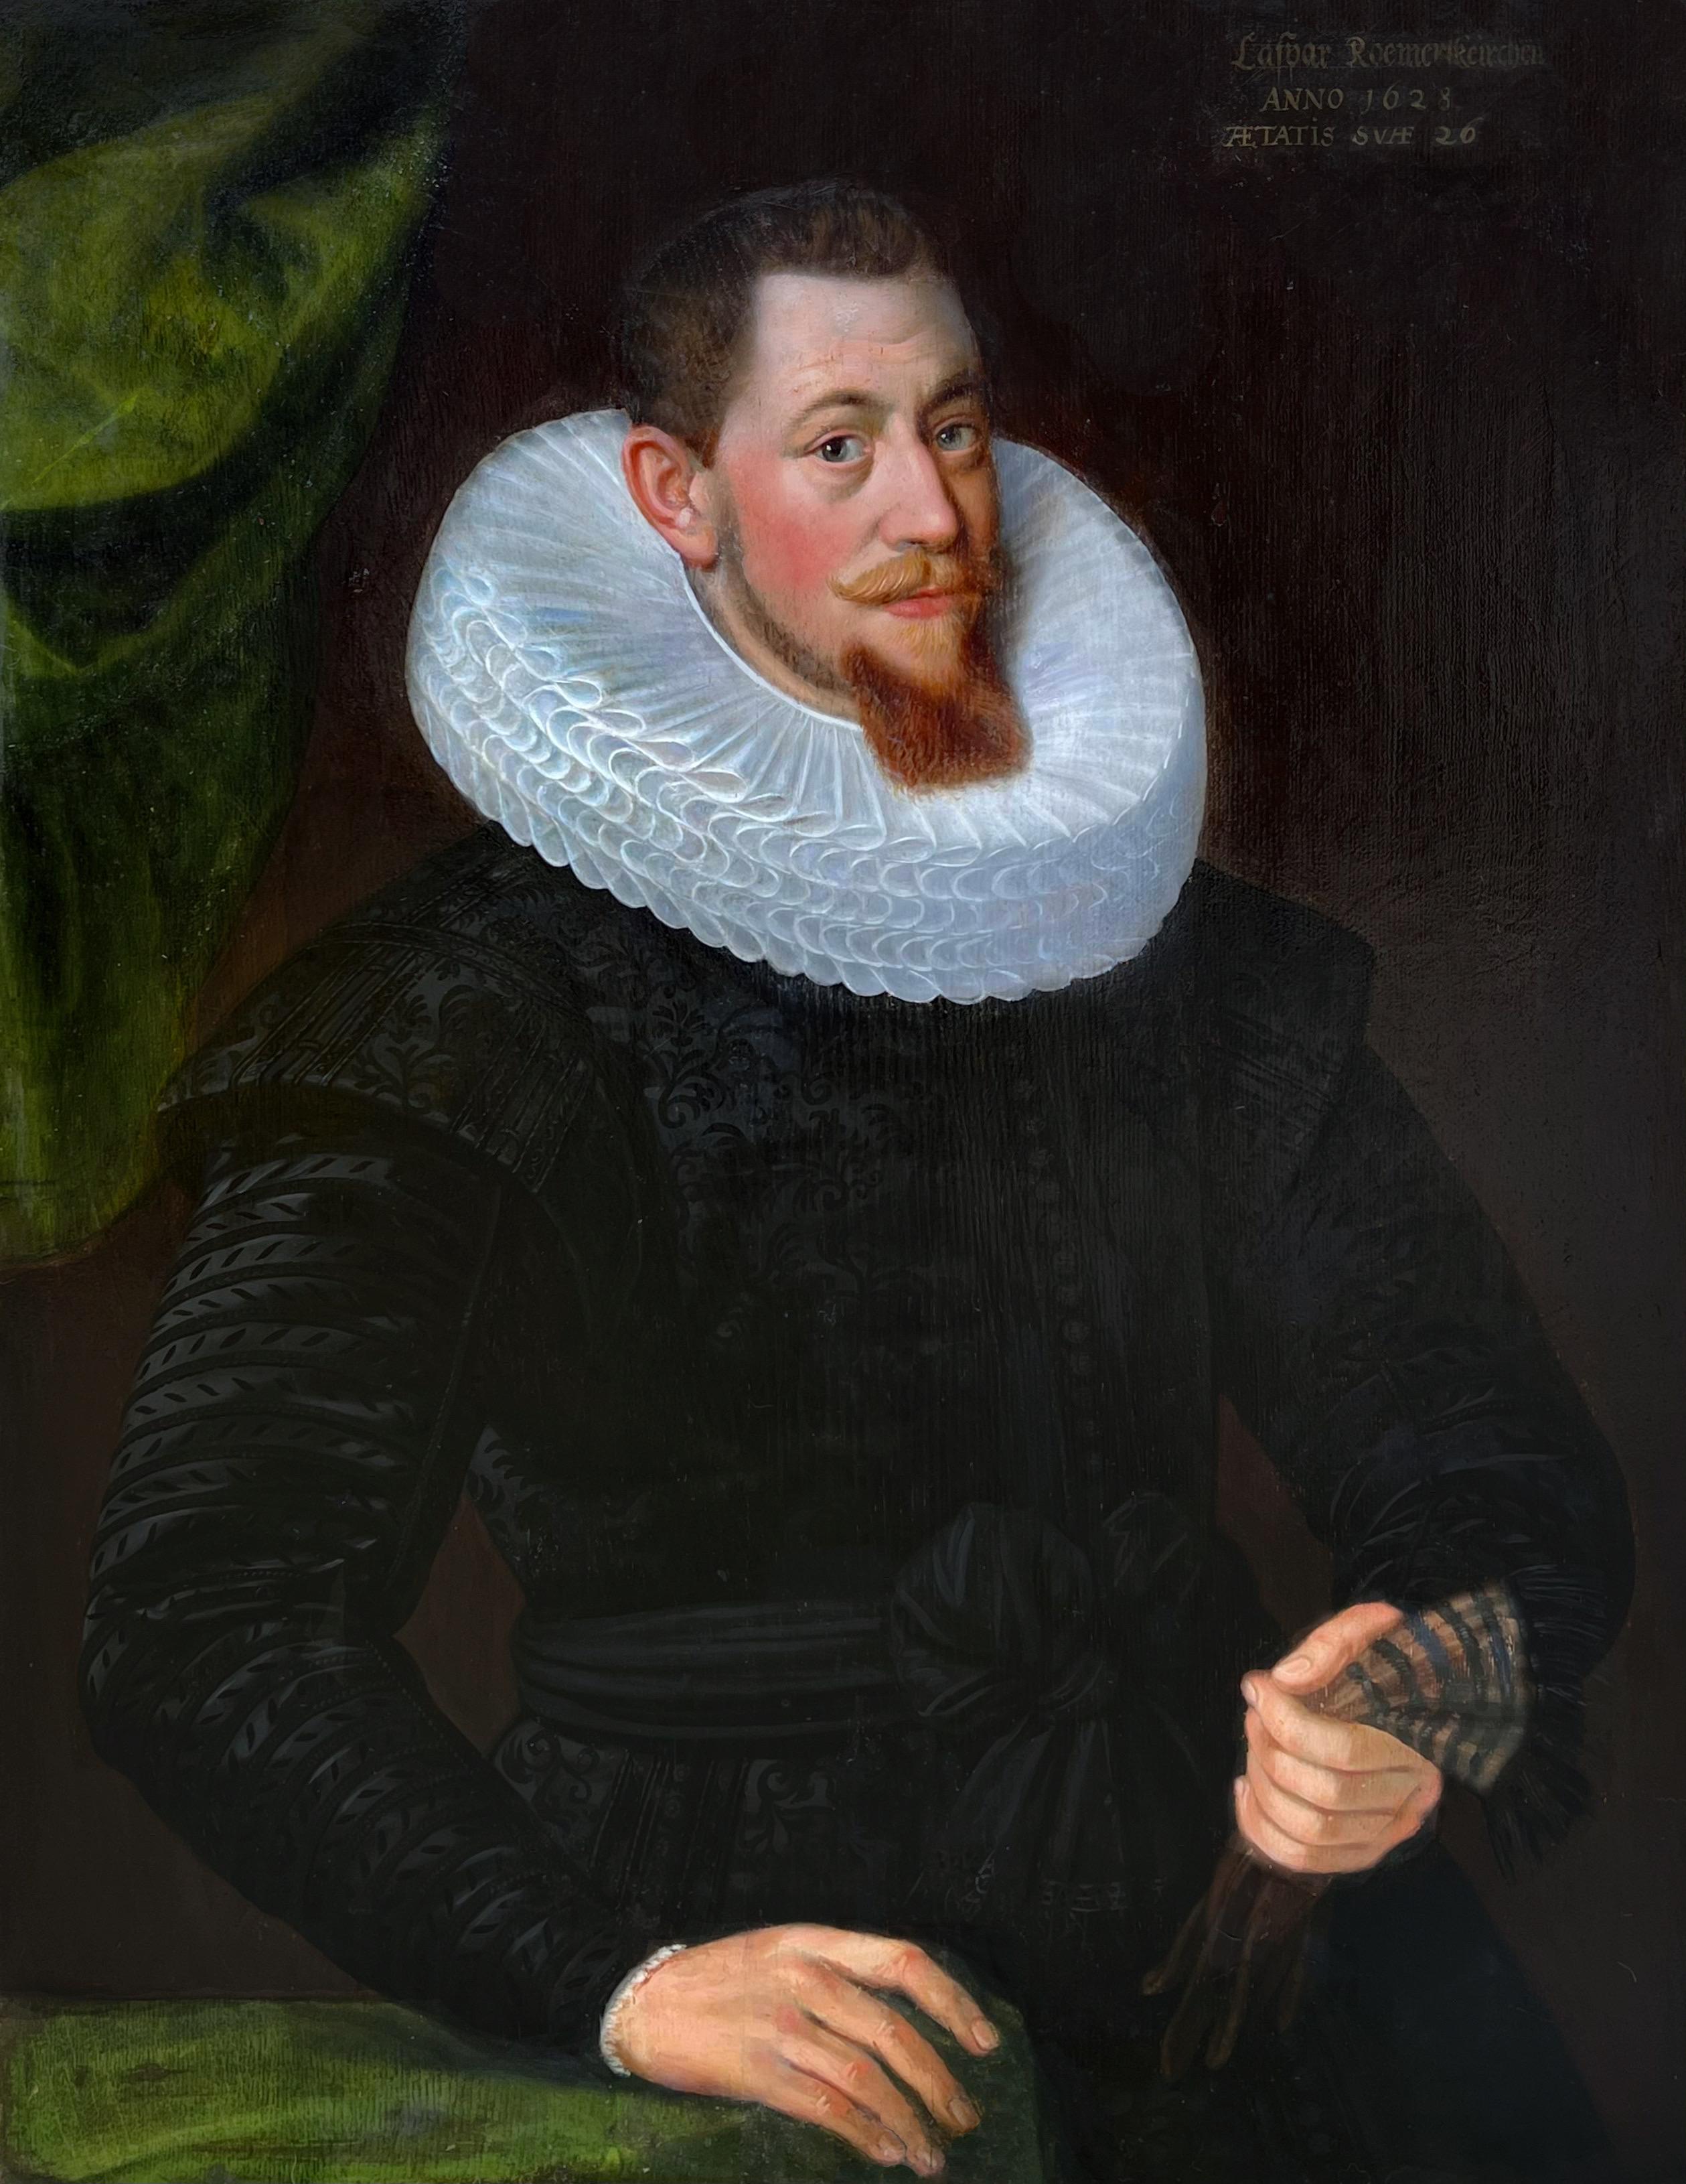 Gottfried De Wedig Portrait Painting - 17th century German portrait of a man - Wine merchant Caspar Roemerskirchen 1628